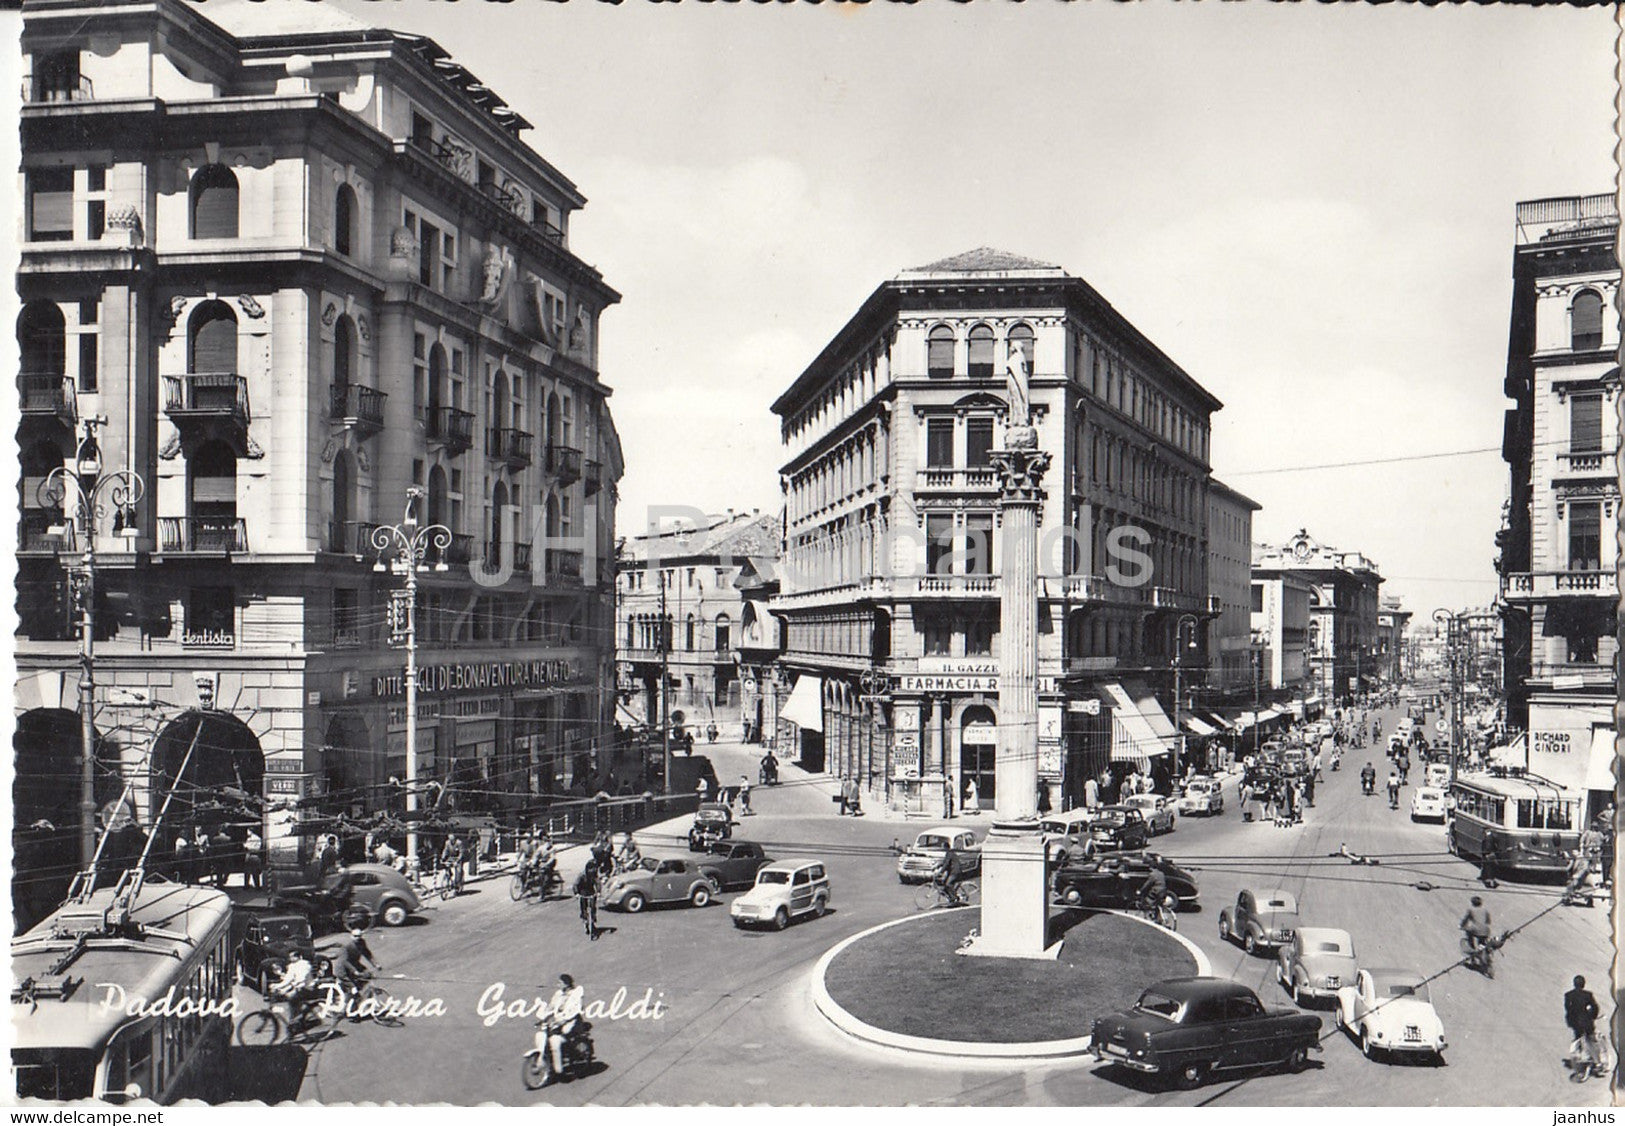 Padova - Piazza Garibaldi - car - trolleybus - square - old postcard - 1957 - Italy - used - JH Postcards